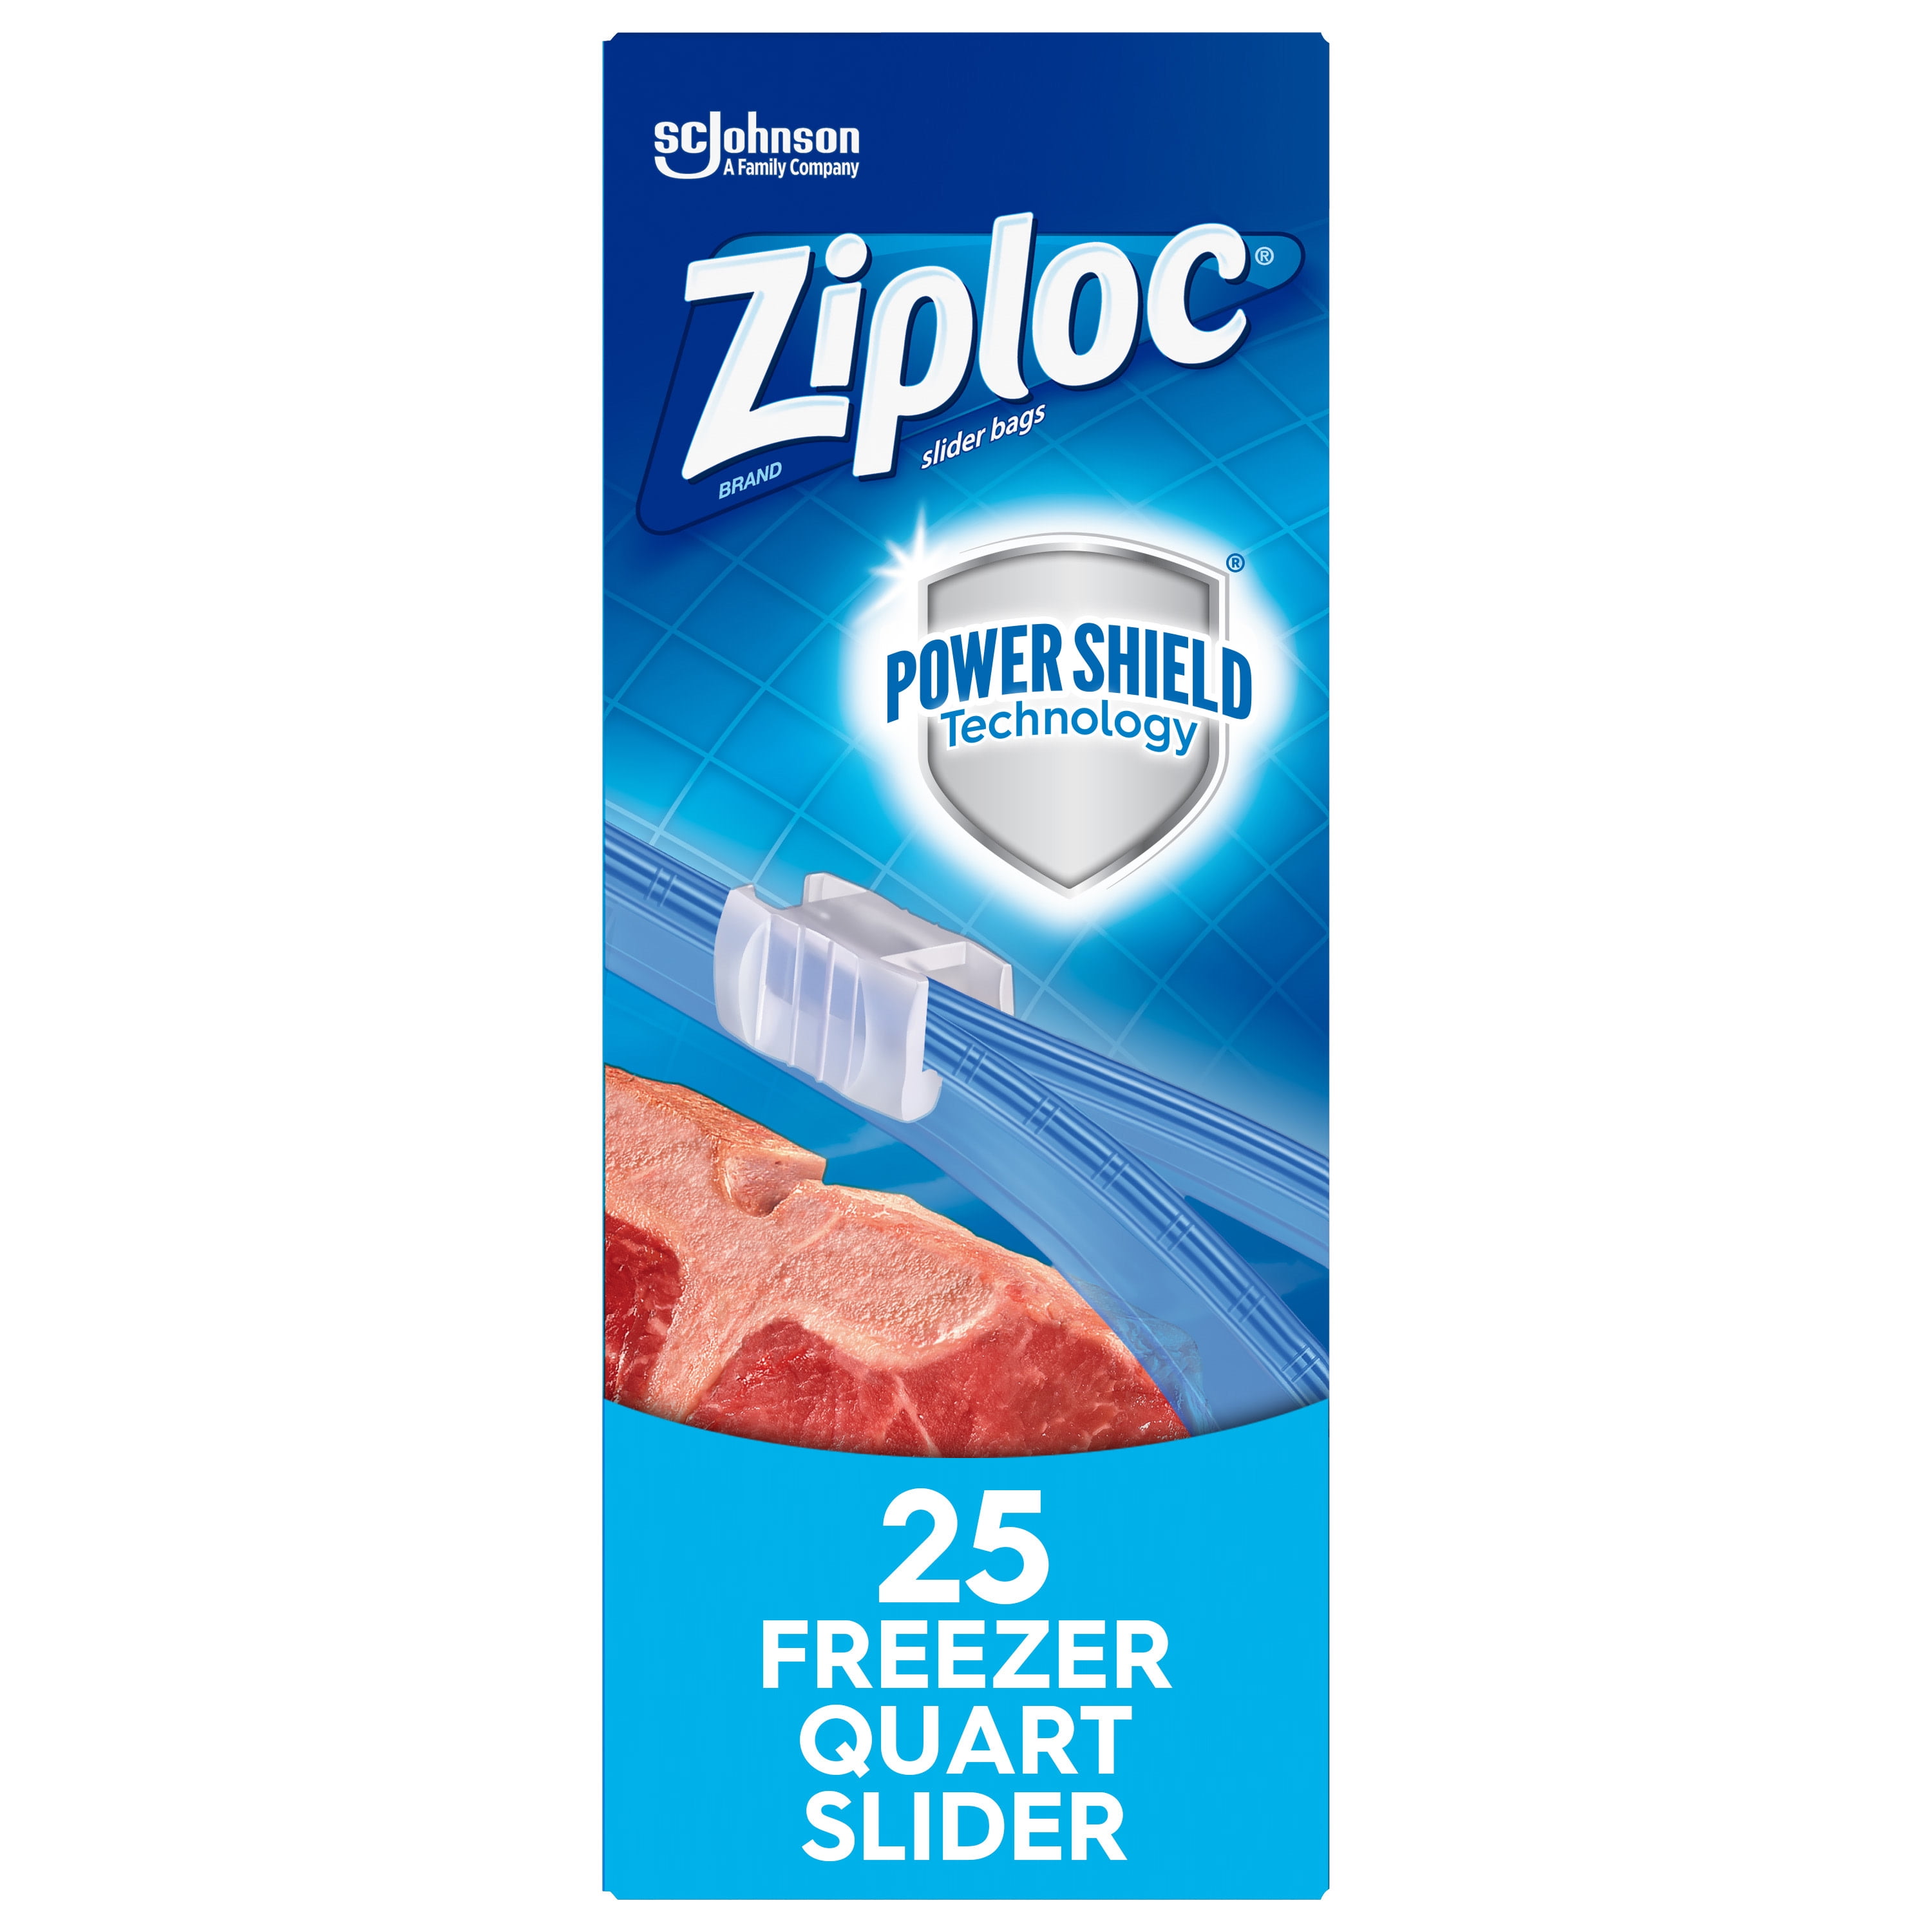 Ziploc bags 54 x Freezer Quart storage ziplock Grip N Seal SC Johnson new